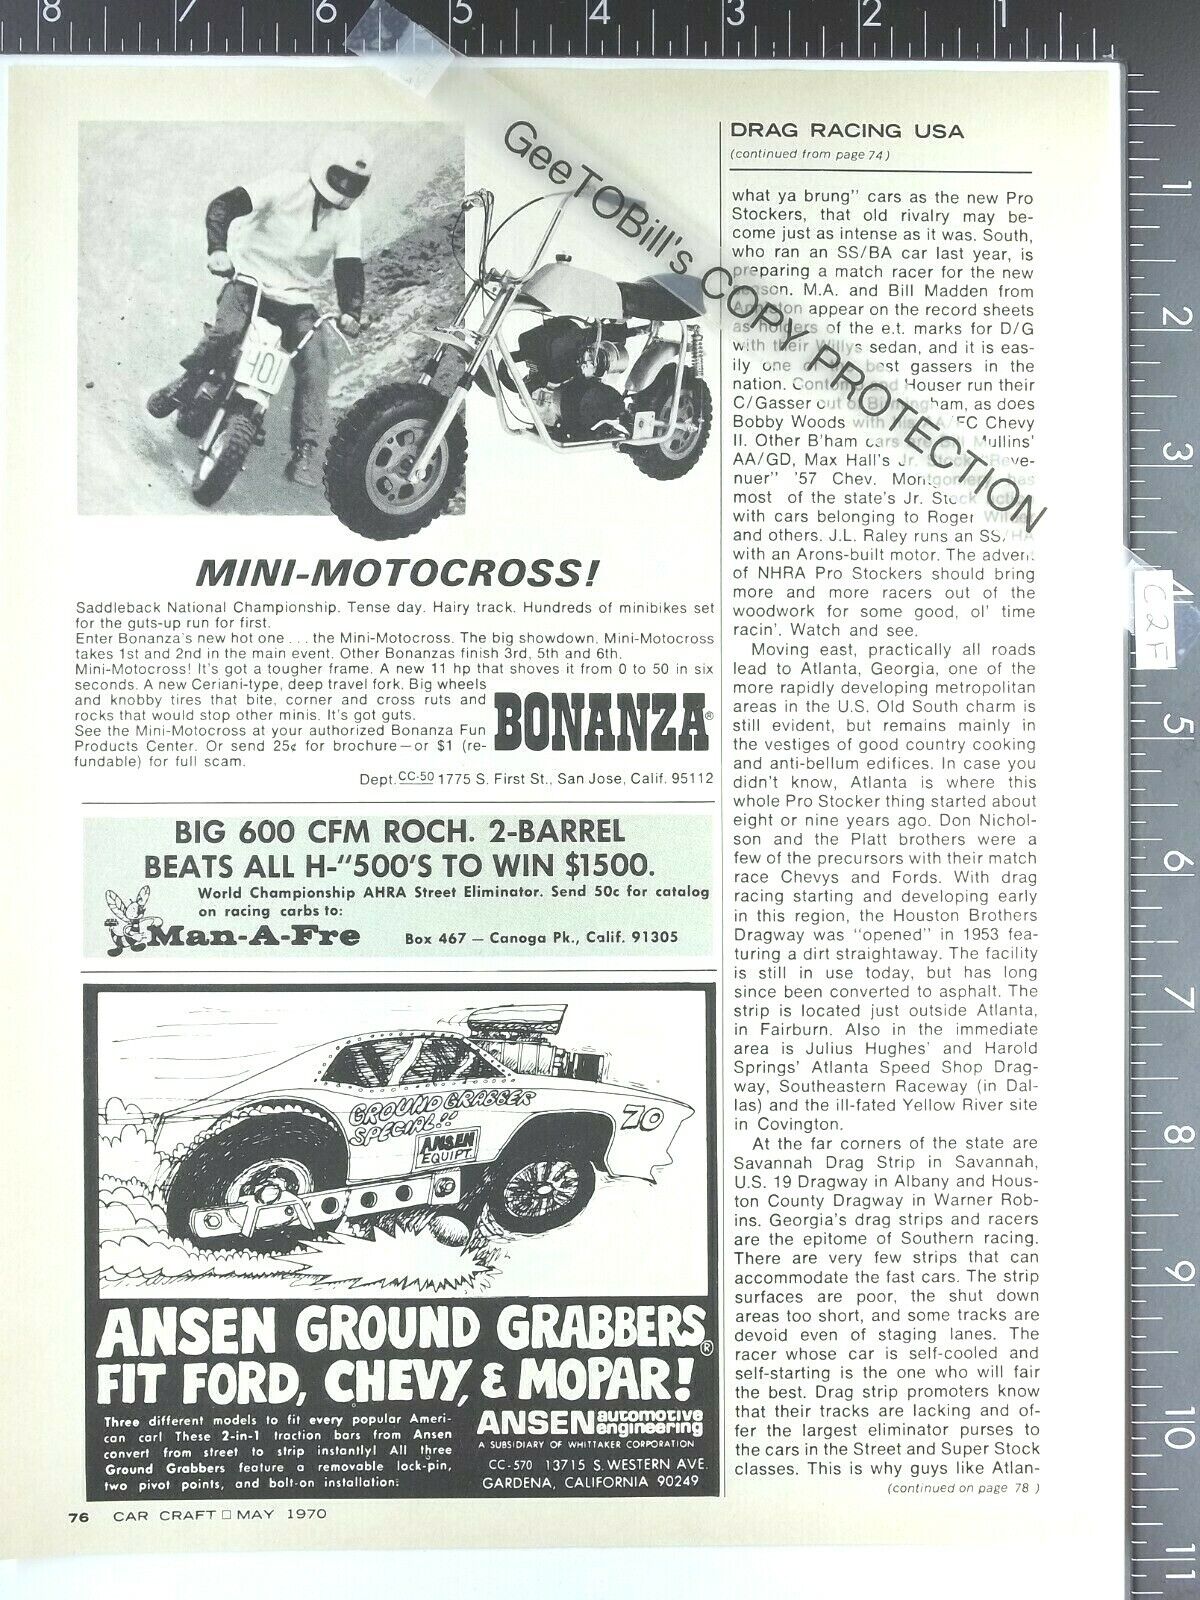 1970 vintage ADS Bonanza Mini-Motocross minibike Saddleback, Ansen traction bars